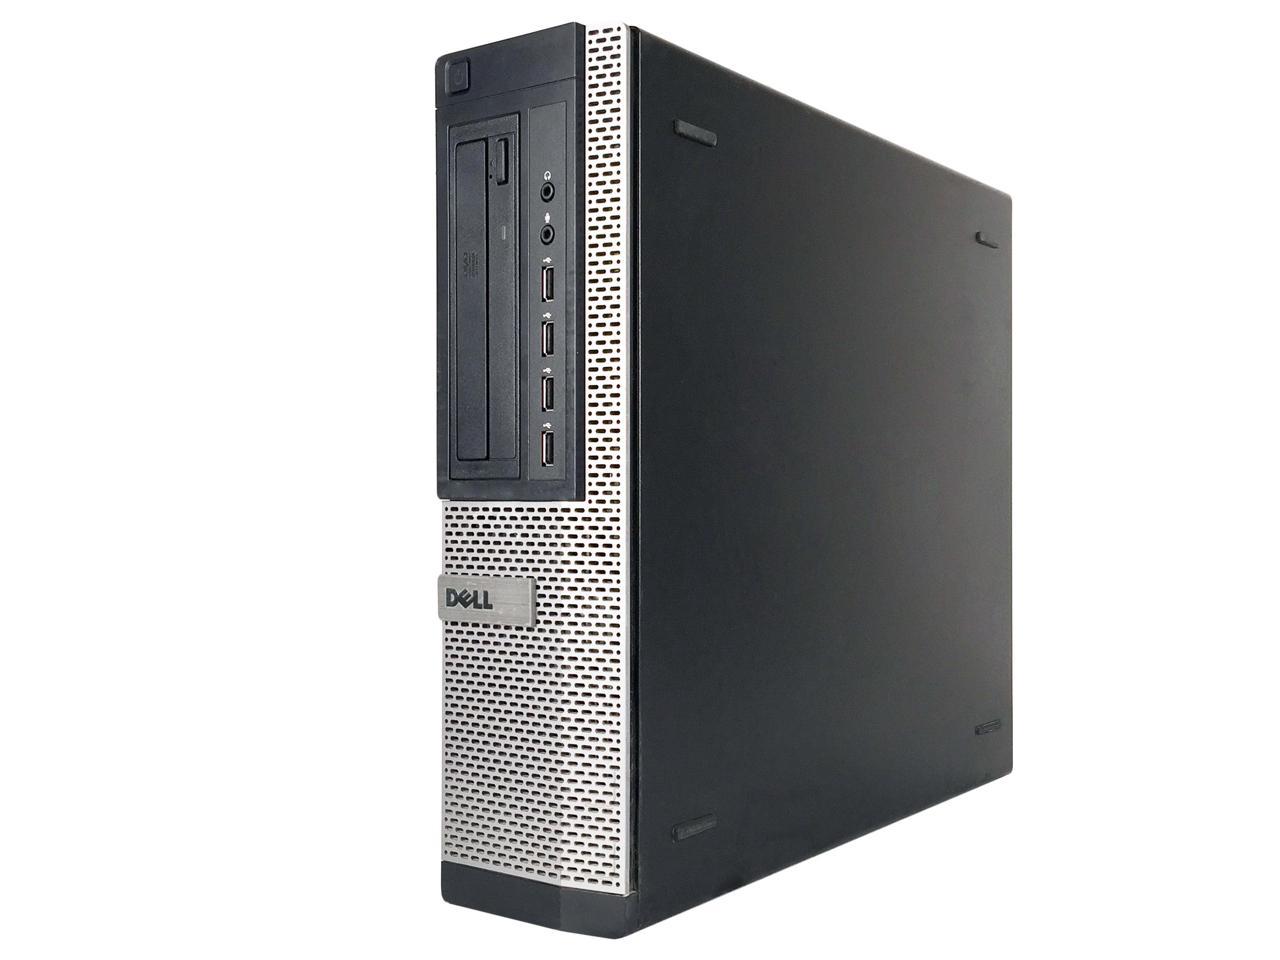 Refurbished Dell Grade A OptiPlex 990 Desktop Computer, Intel Core I5-2500 (3.3 GHz), 4G DDR3, 1T HDD, DVD, Windows 10 Pro 64-bit (English/Spanish), 1 Year Warranty